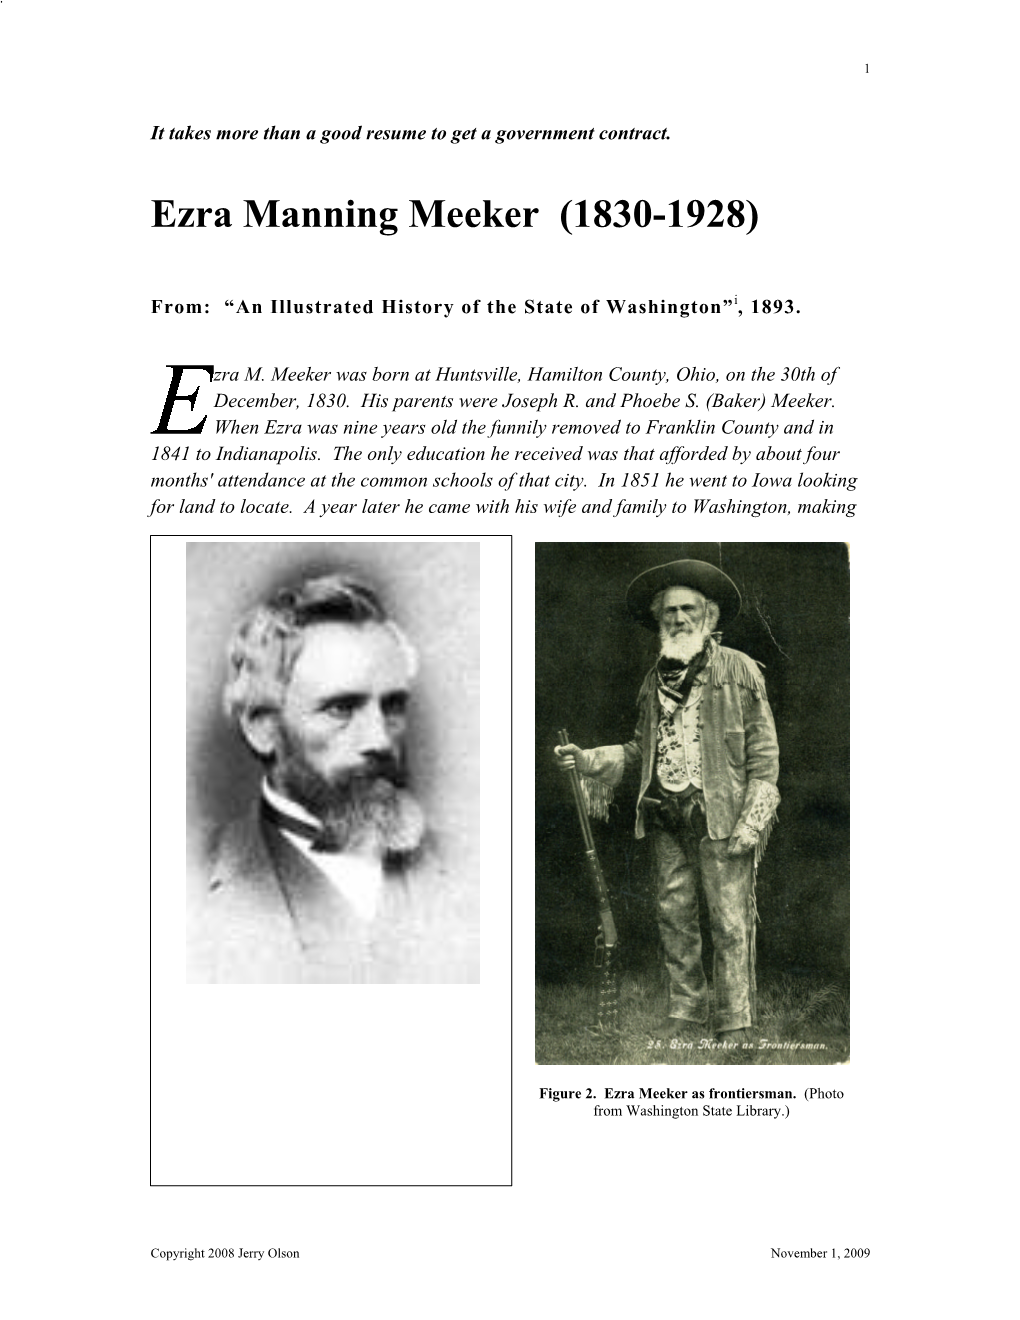 Ezra Manning Meeker (1830-1928)